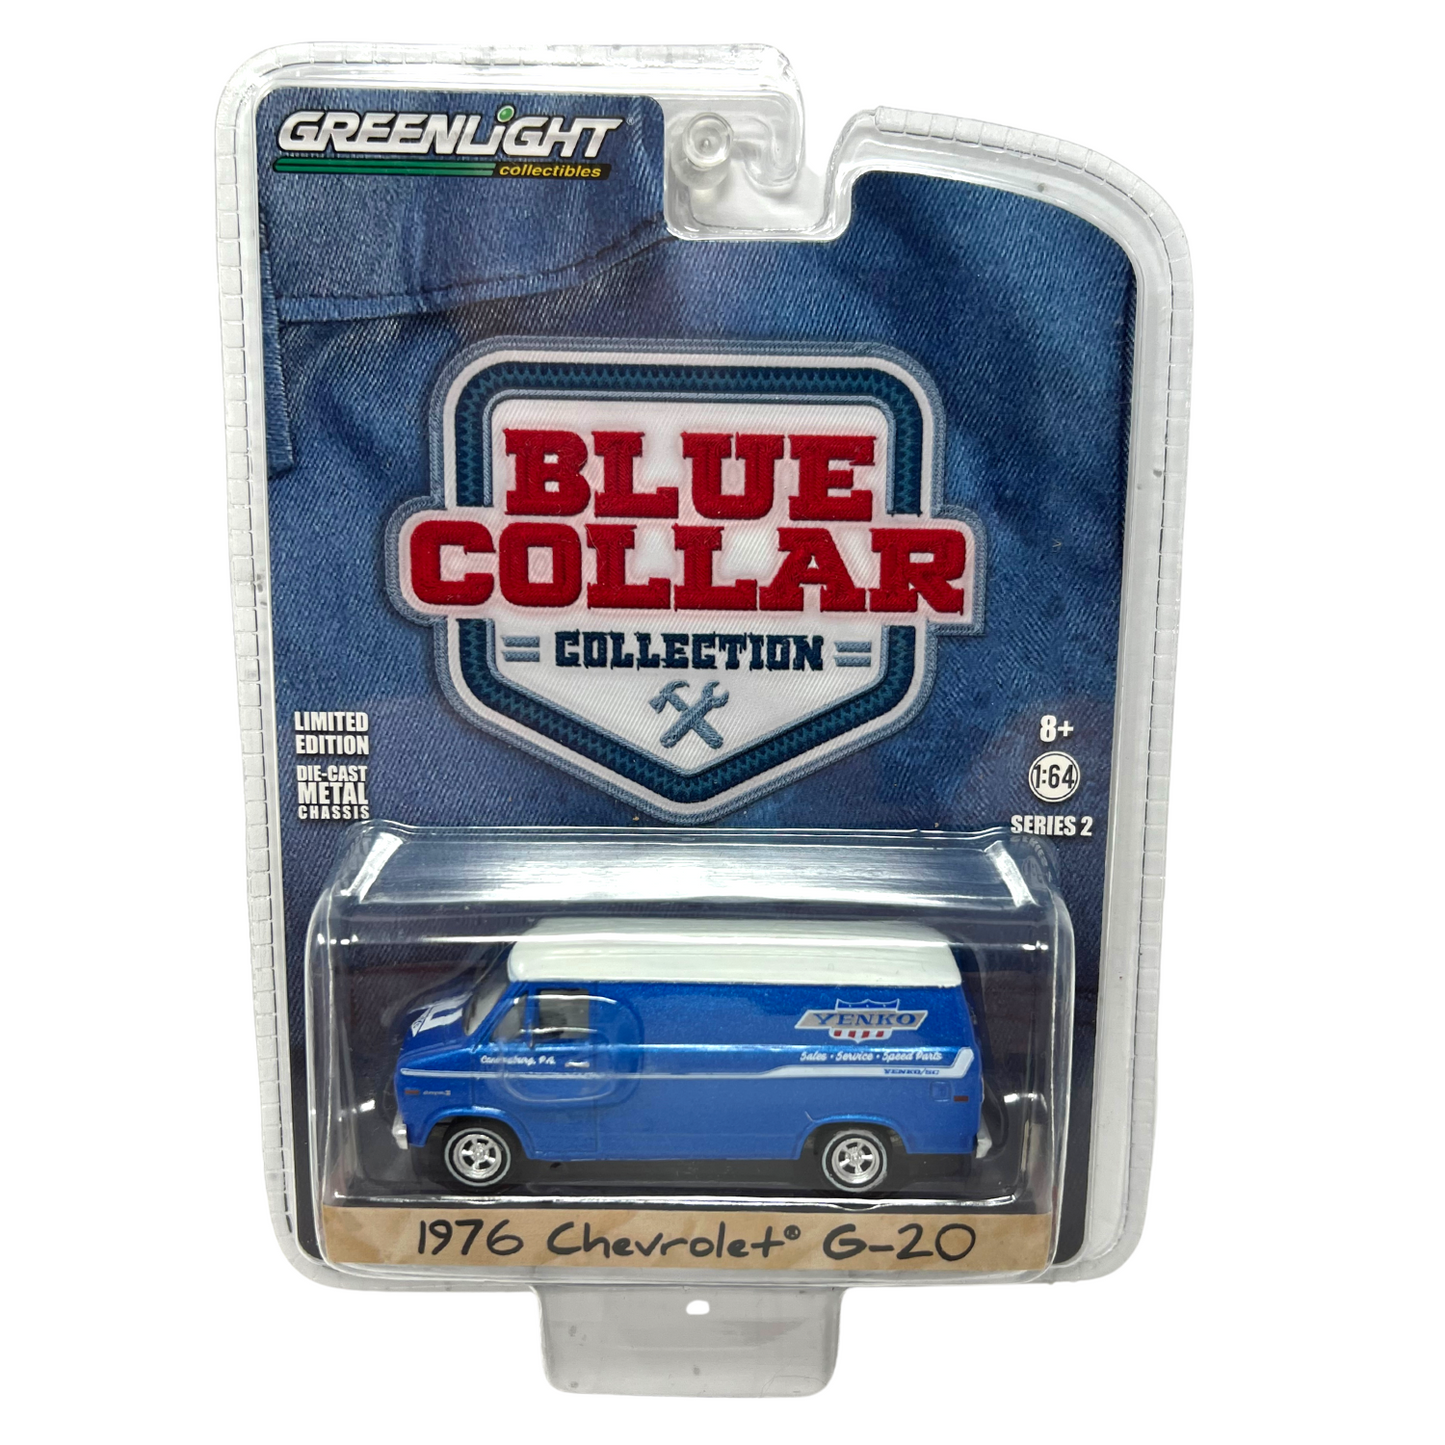 Greenlight Blue Collar Collection 1976 Chevrolet G-20 1:64 Diecast